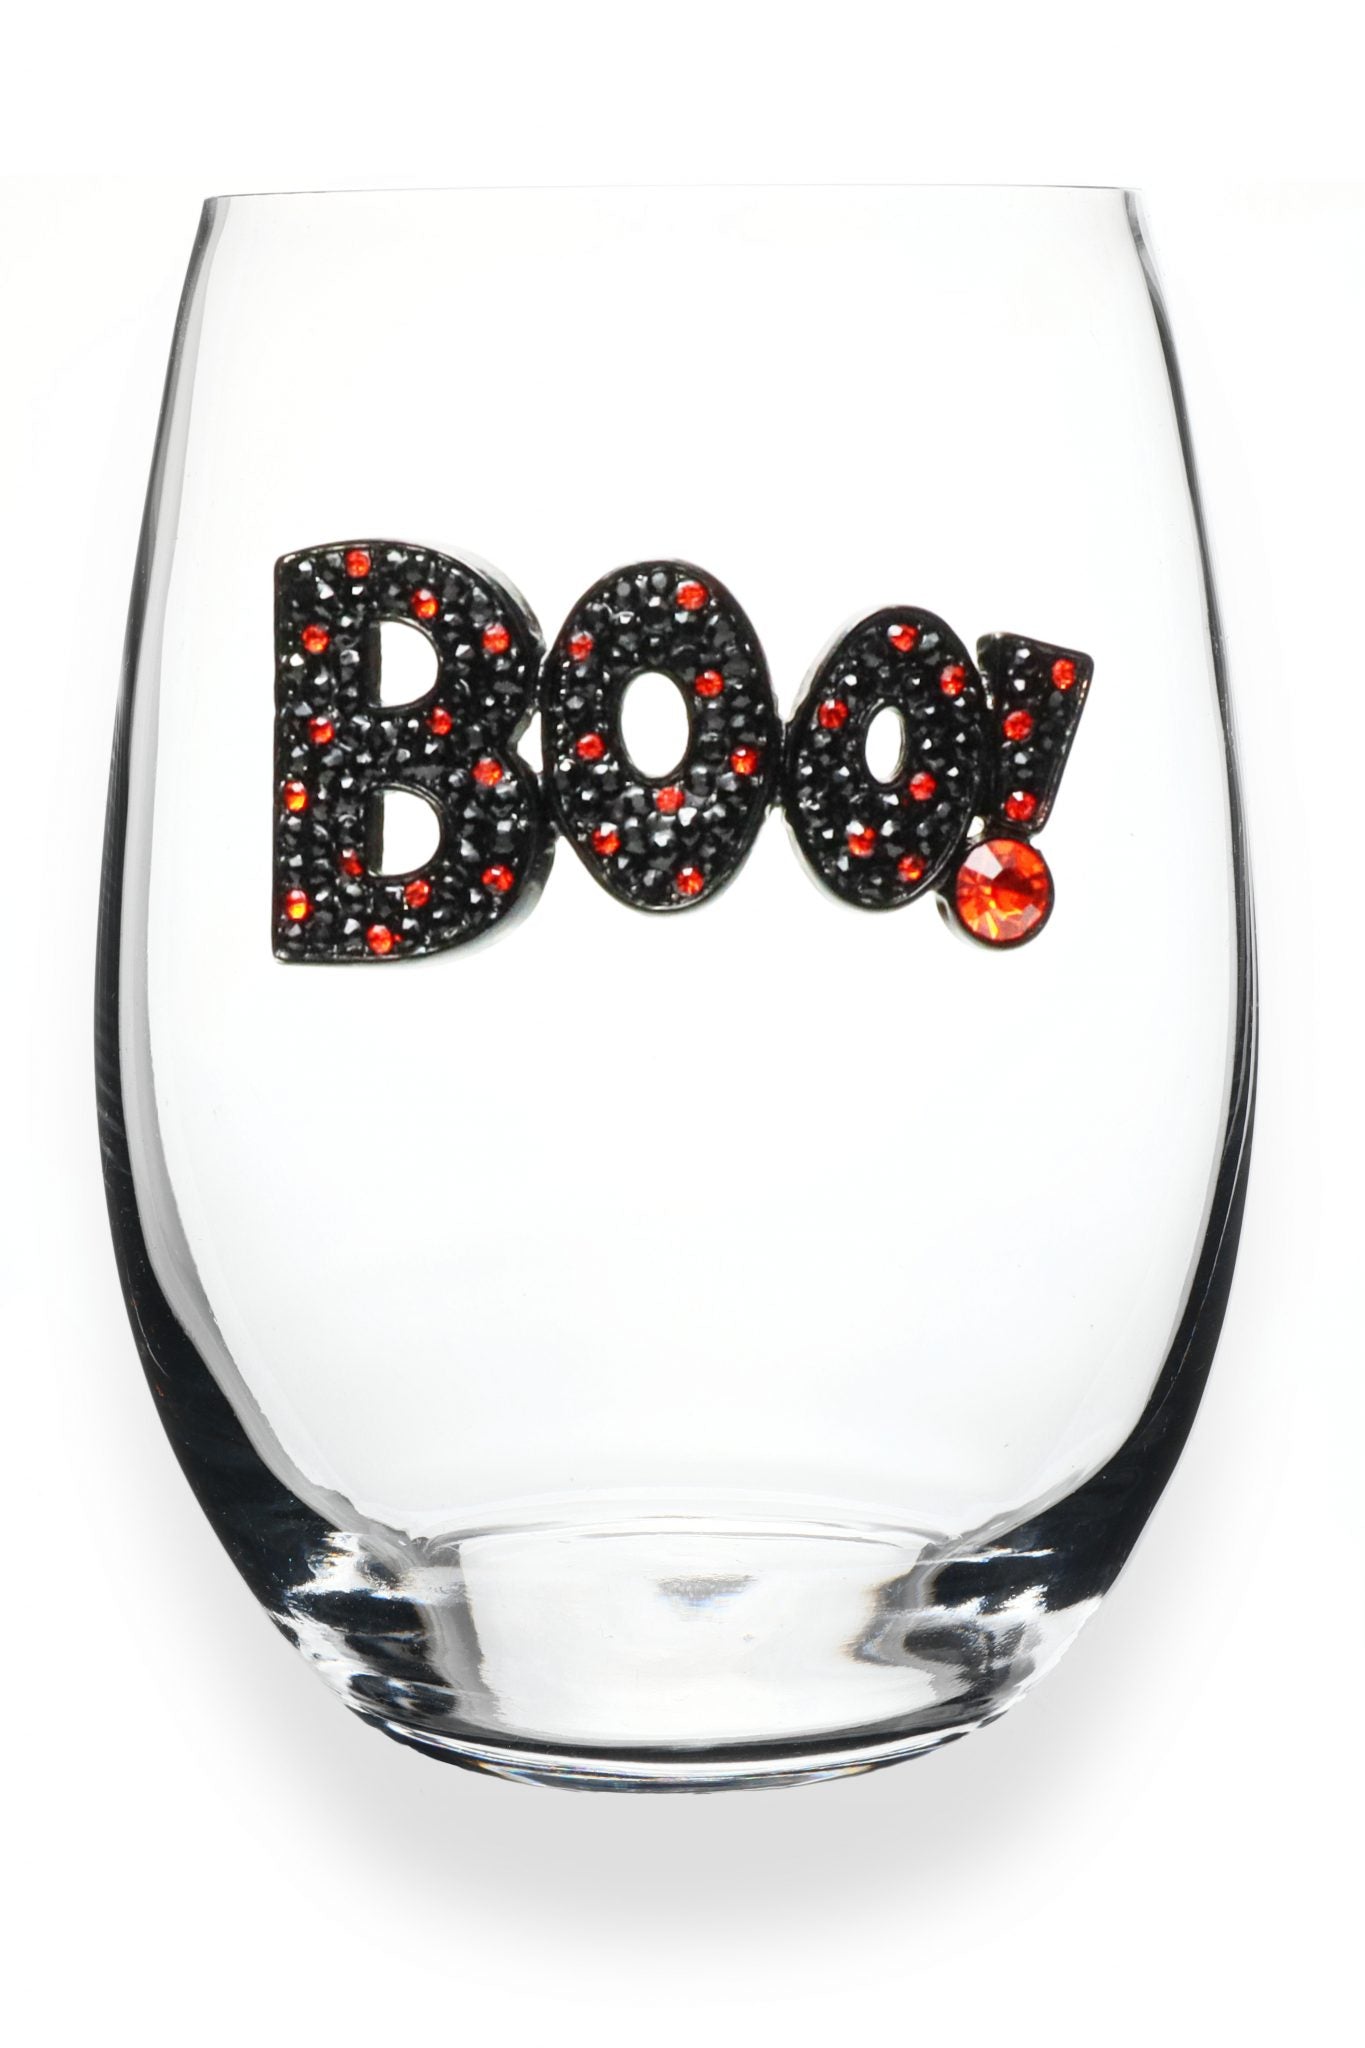 Jeweled Stemless Wine Glass - Fall/Halloween - Boo!